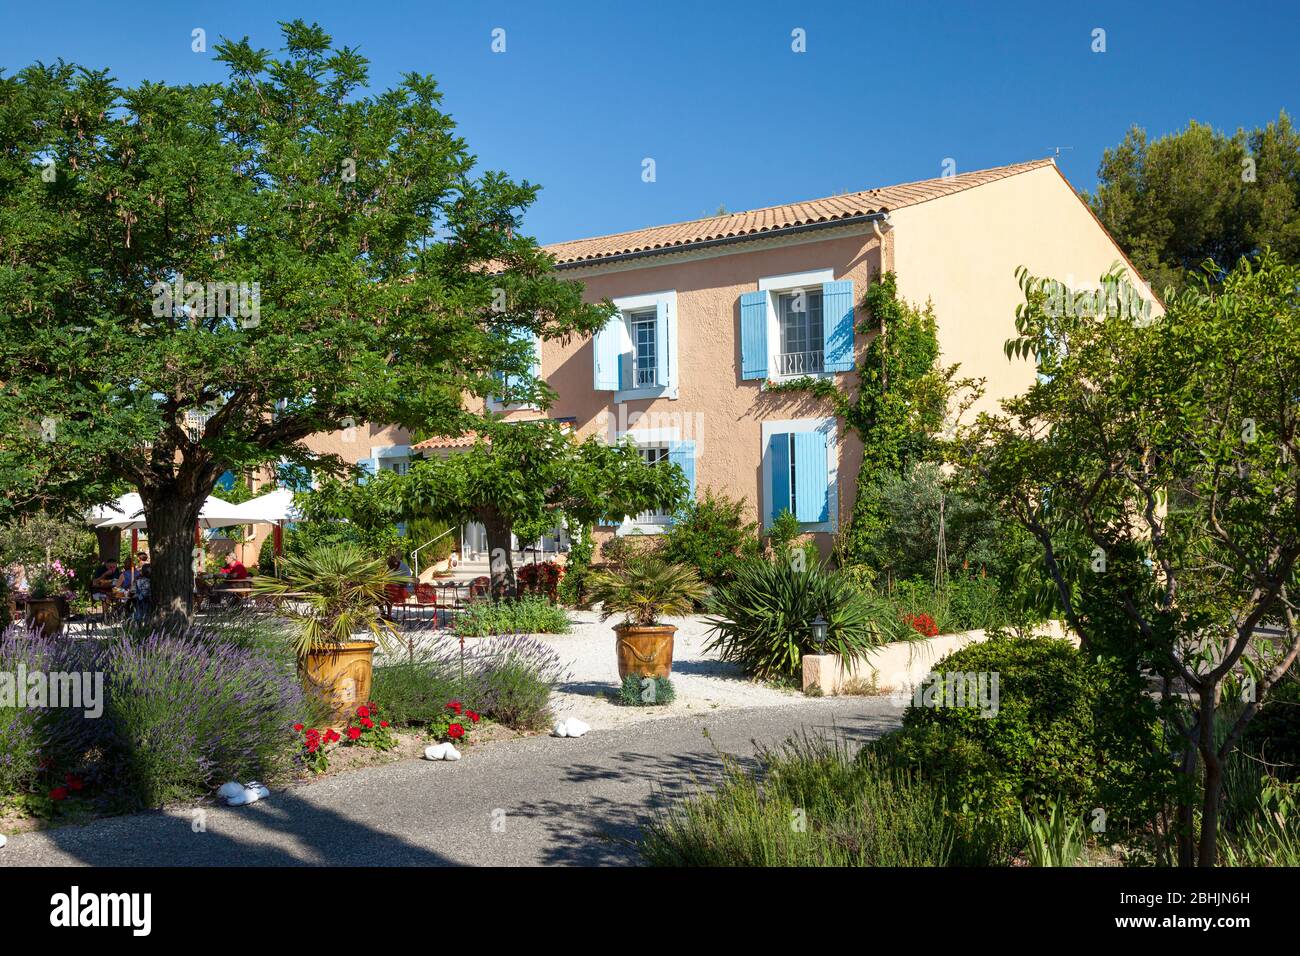 Früh morgens im Canto Cigalo - einem Boutique-Hotel in St Remy de Provence, Frankreich Stockfoto